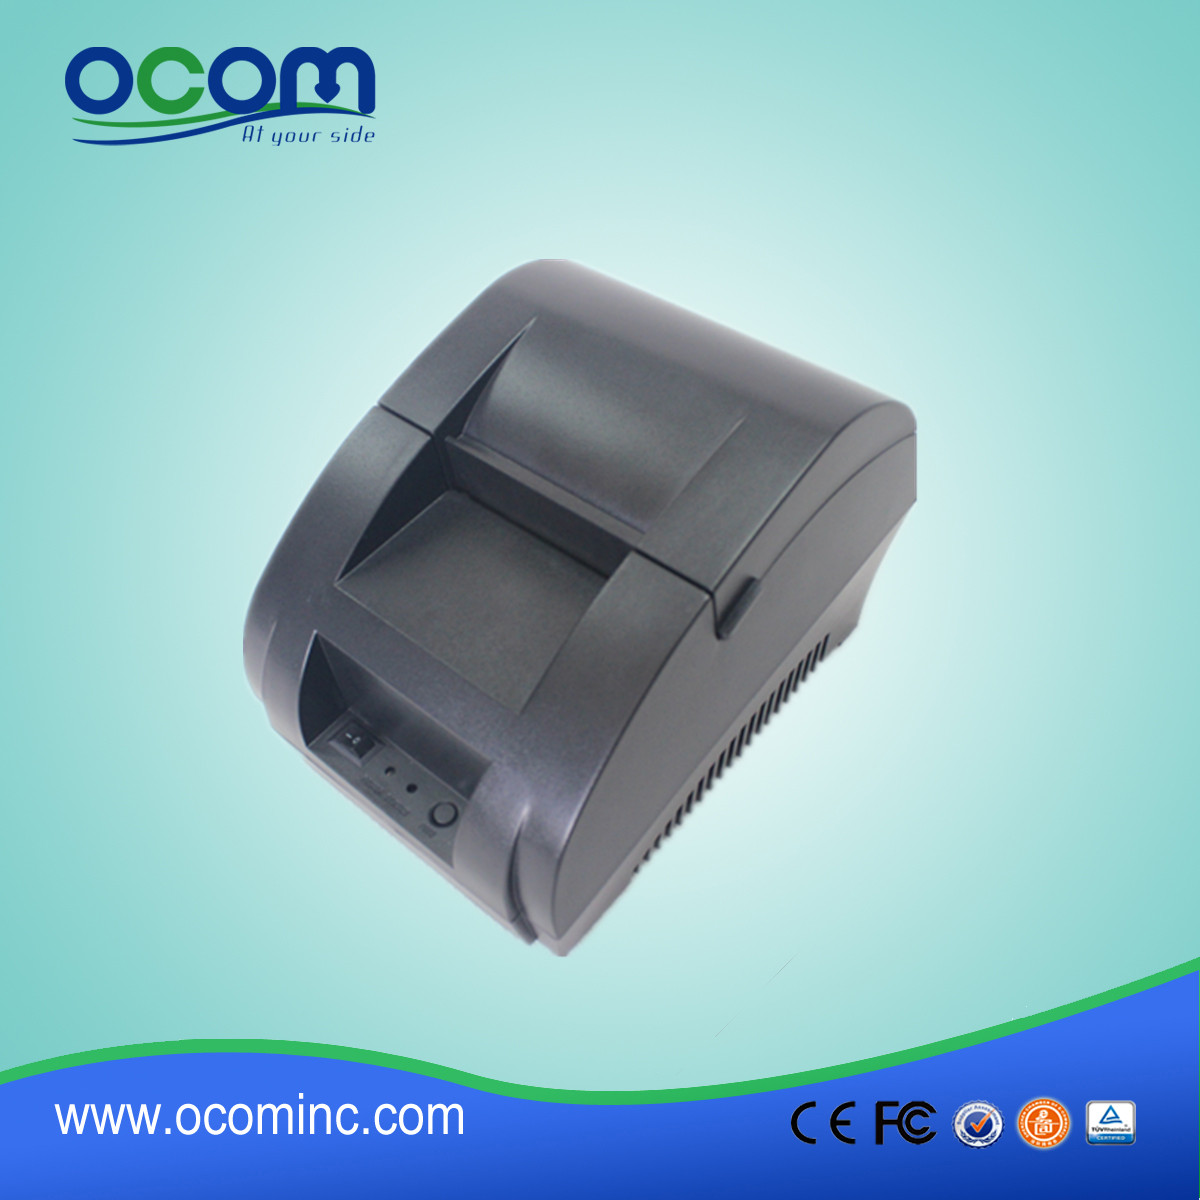 OCPP-58Z 58mm热敏收据打印机，内置电源适配器